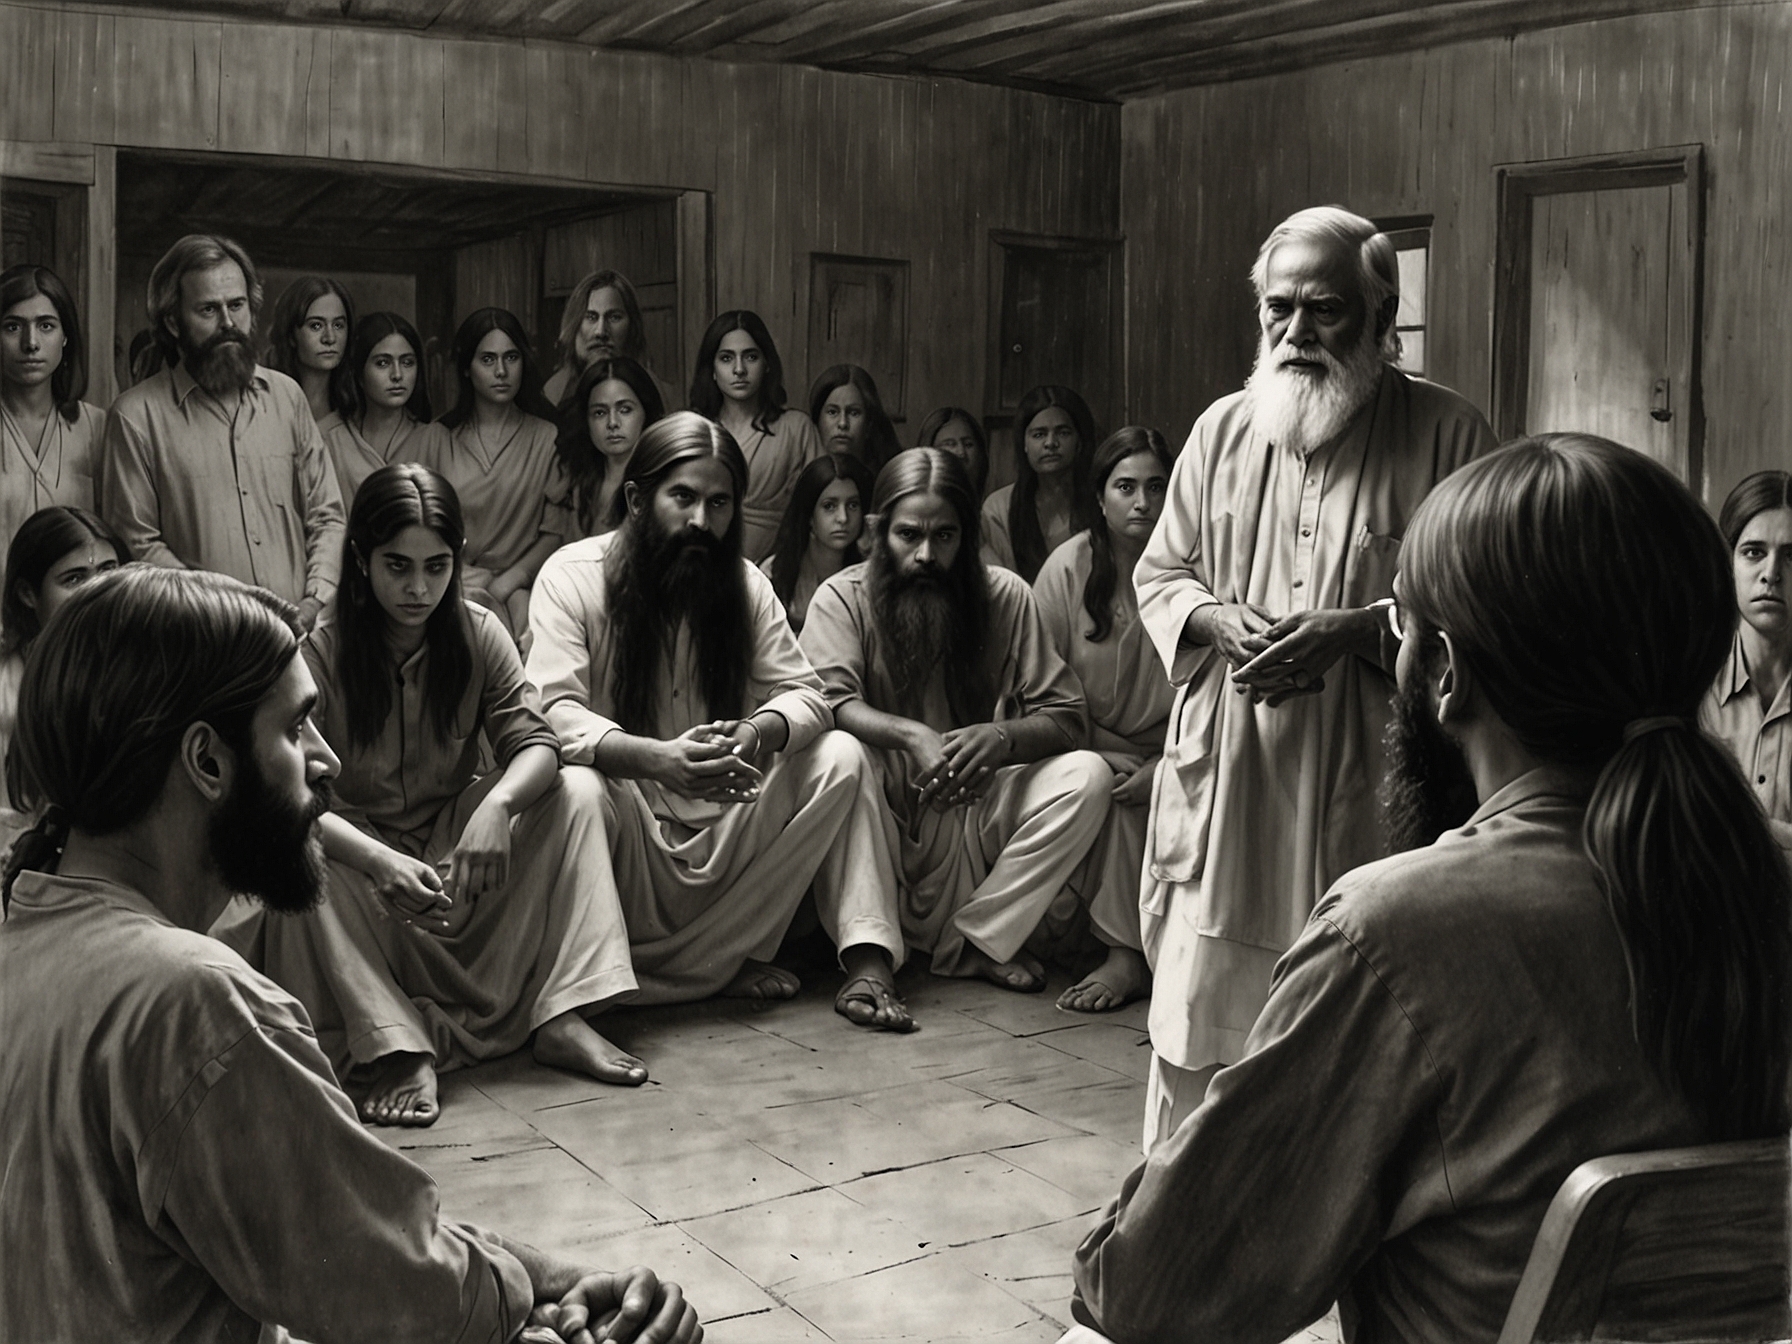 A tense scene from 'Wild Wild Country' shows followers of Bhagwan Shree Rajneesh in deep discussion, highlighting the manipulative environment of the Rajneeshpuram commune.